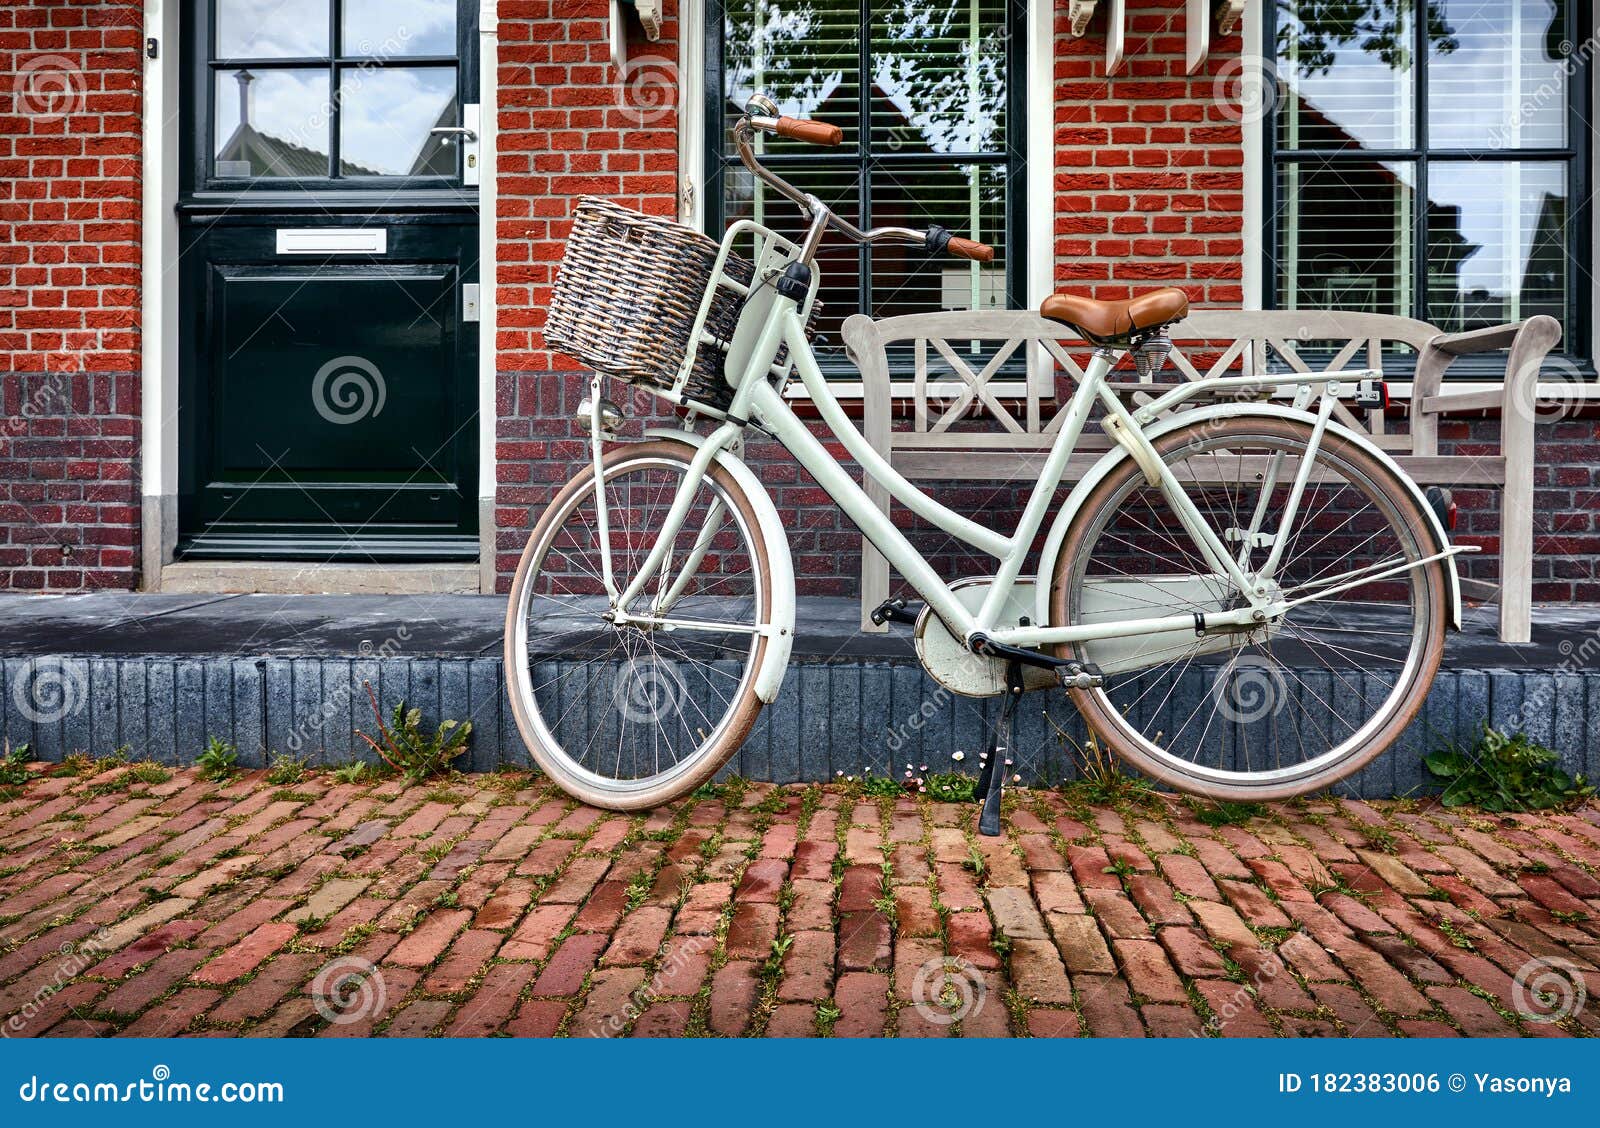 volendam amsterdam netherlands. white retro bicycle